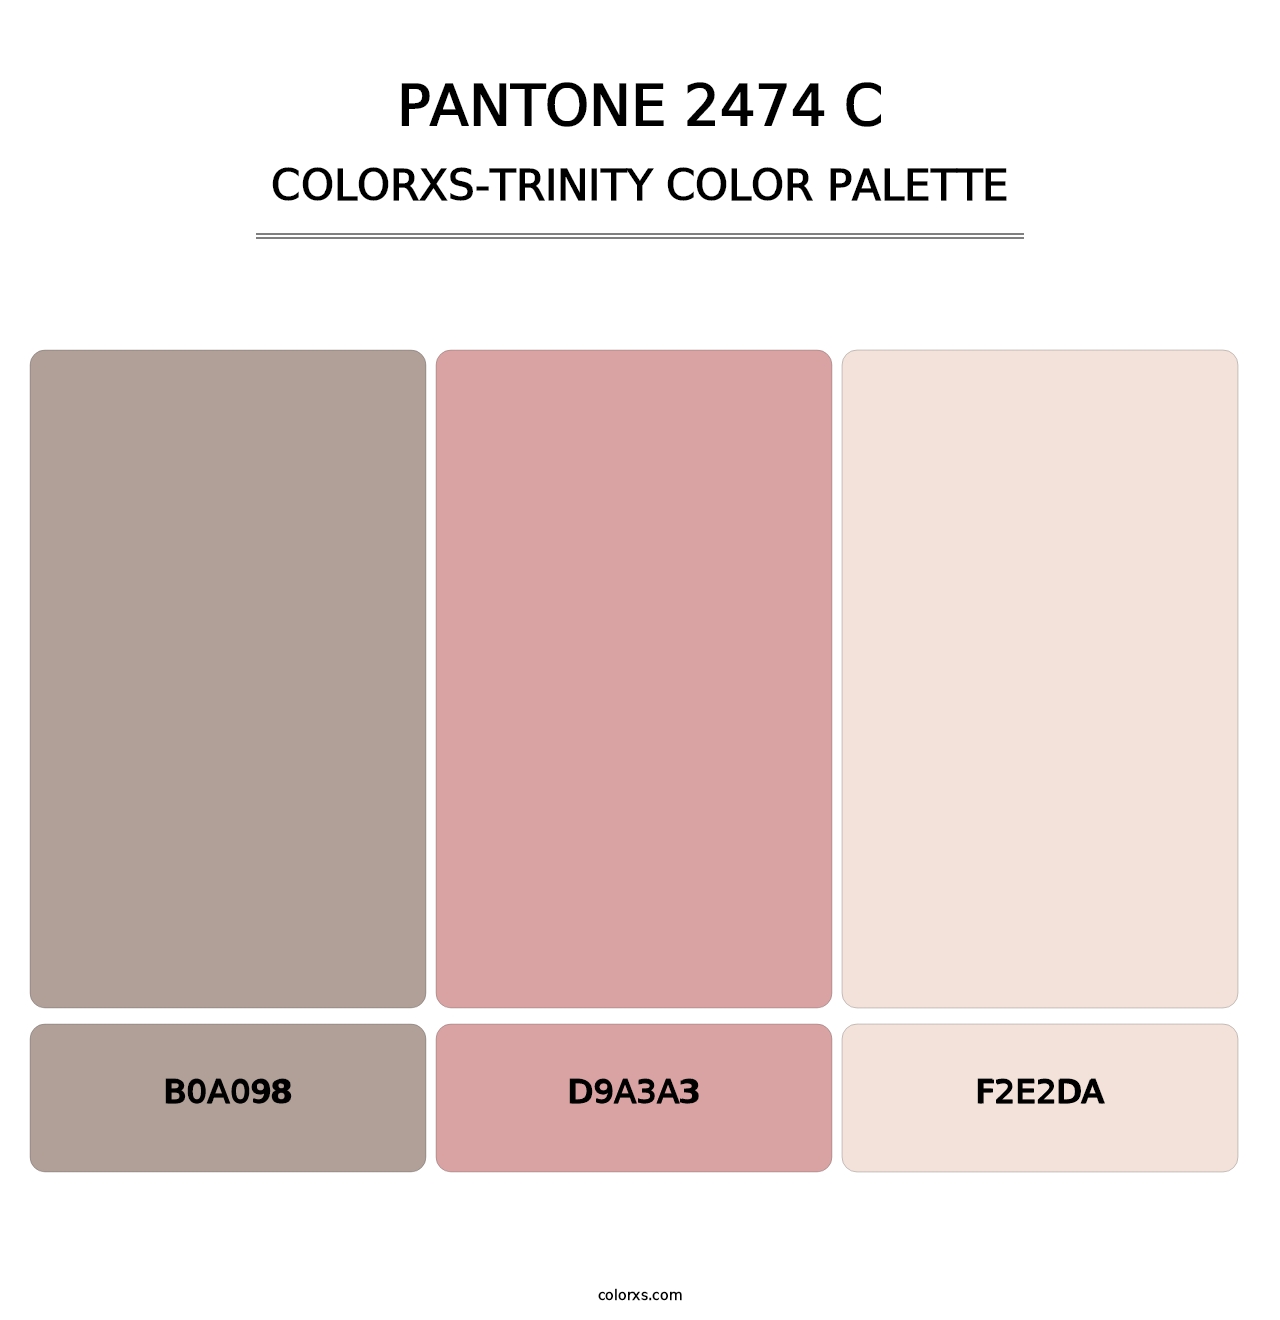 PANTONE 2474 C - Colorxs Trinity Palette